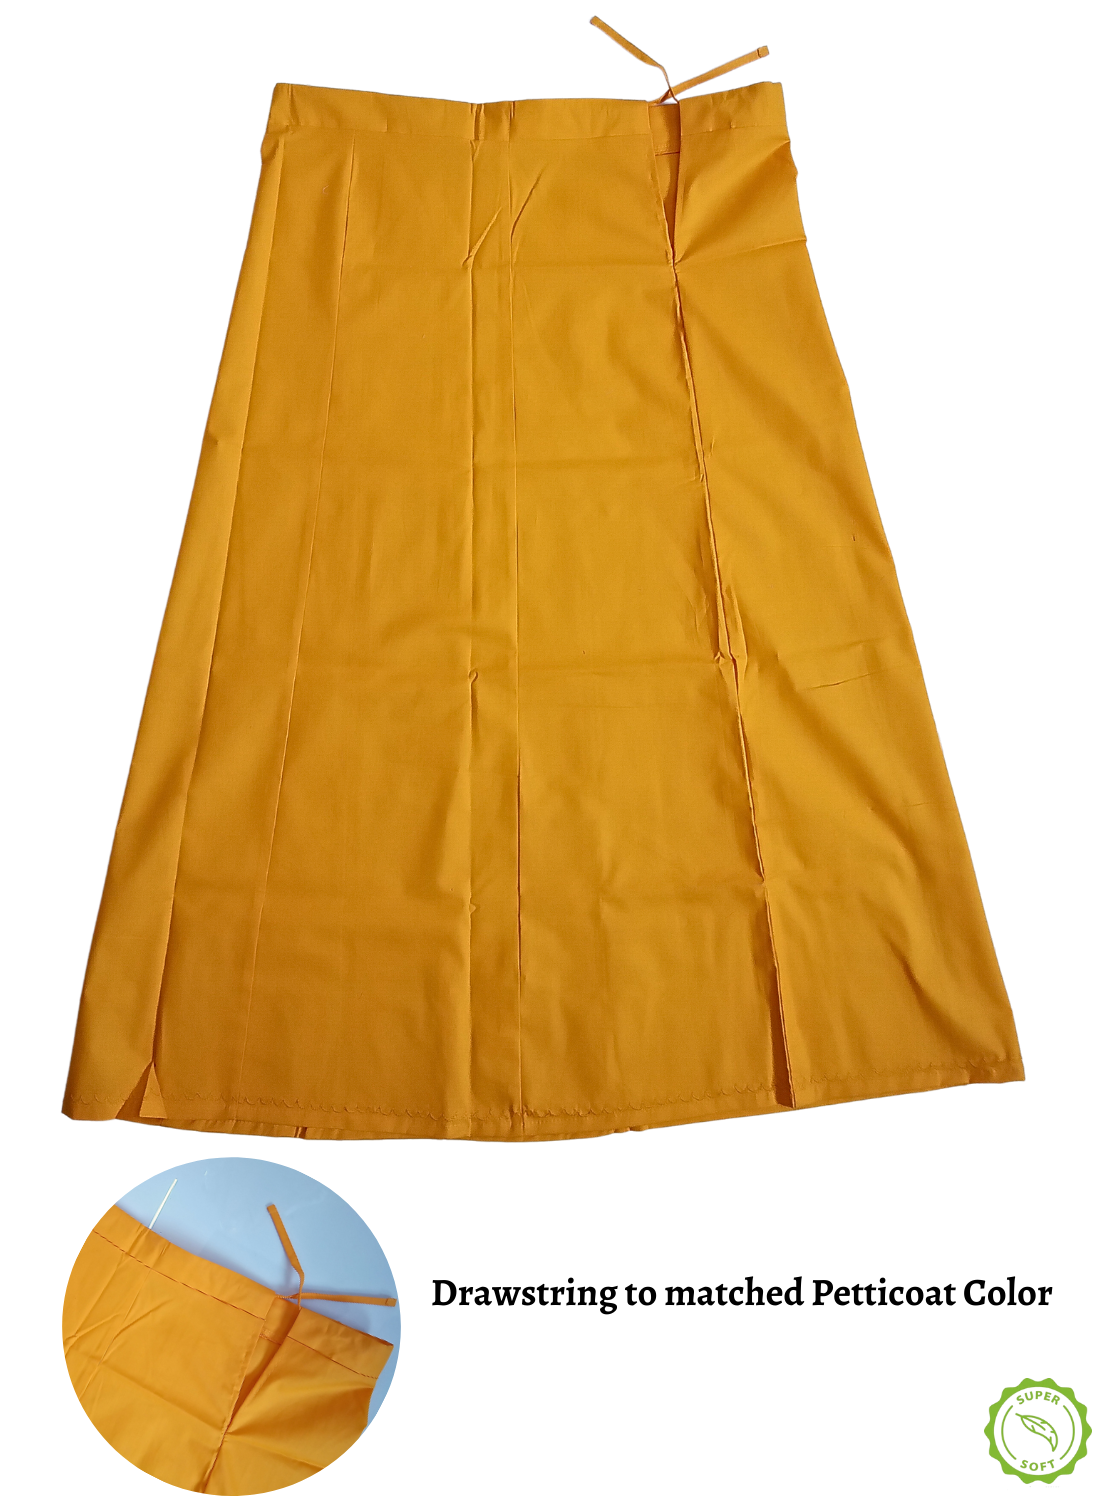 New MANGAI Premium Superior Cotton Petticoats - 7 Part | Premium Branded Women's Cotton Embroidery Petticoats